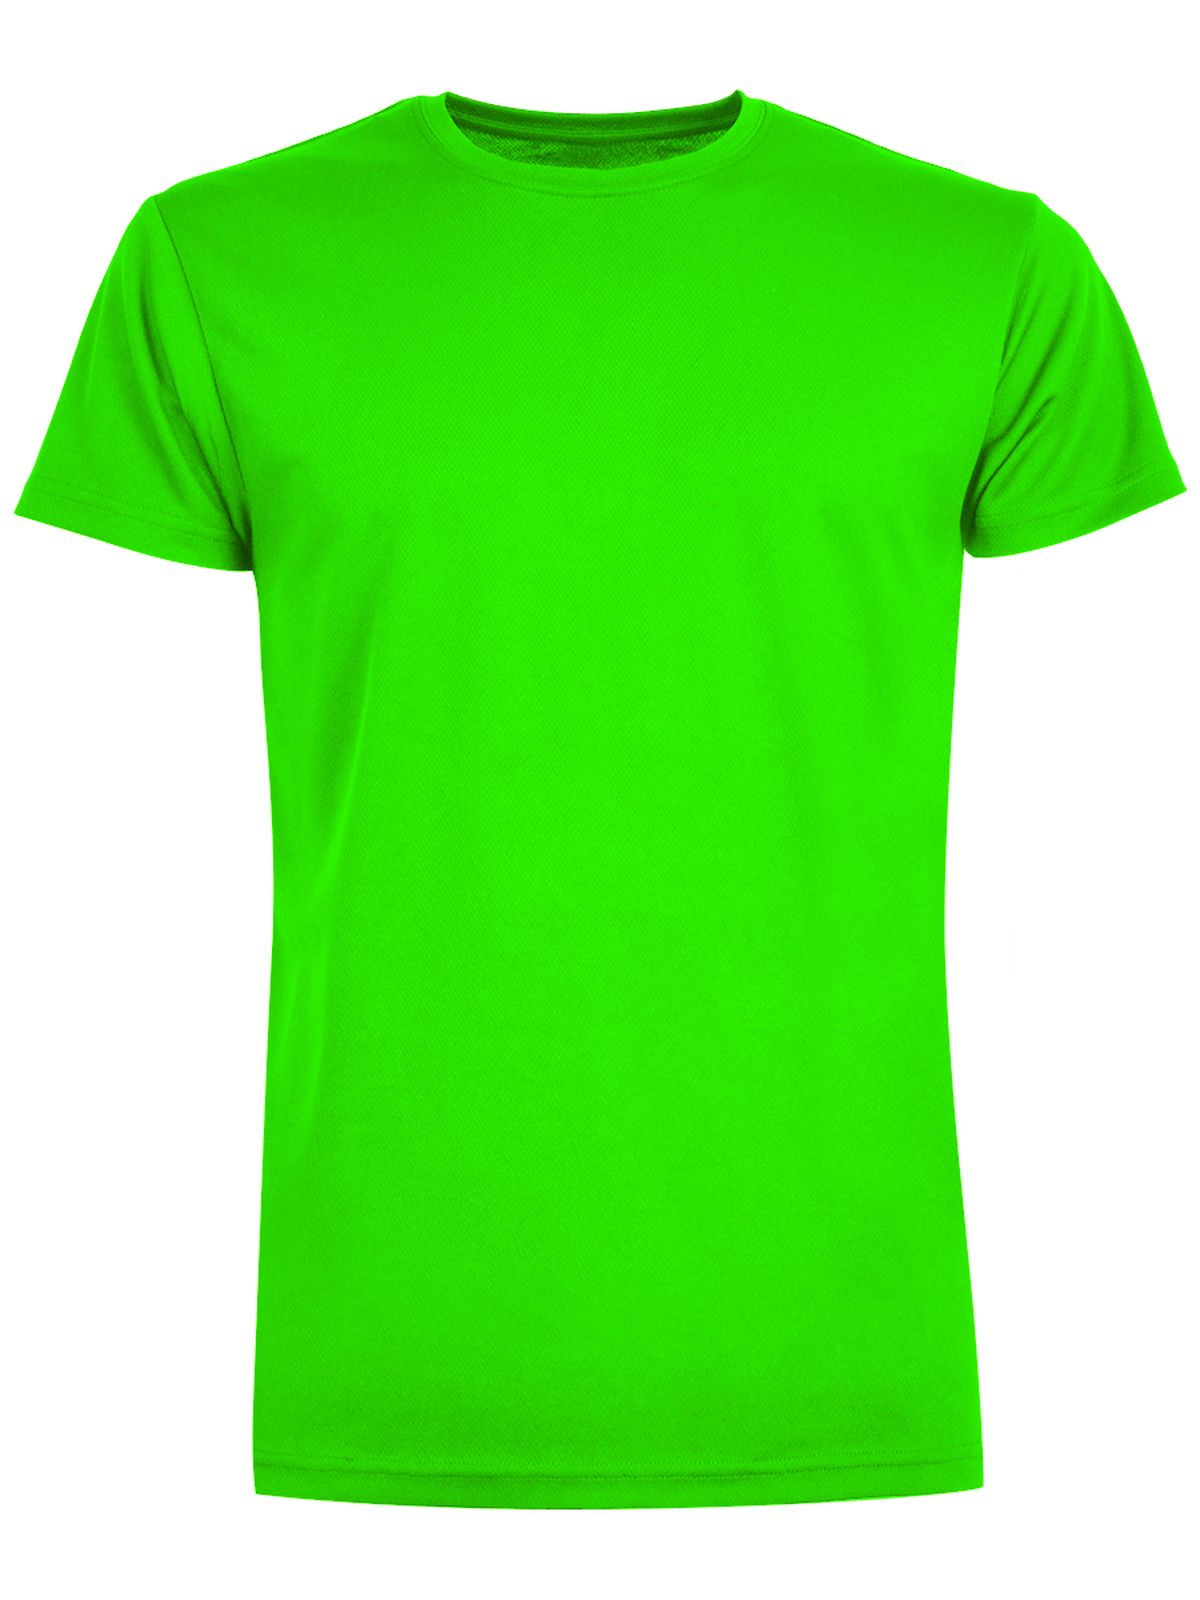 contest-t-fluo-green.webp